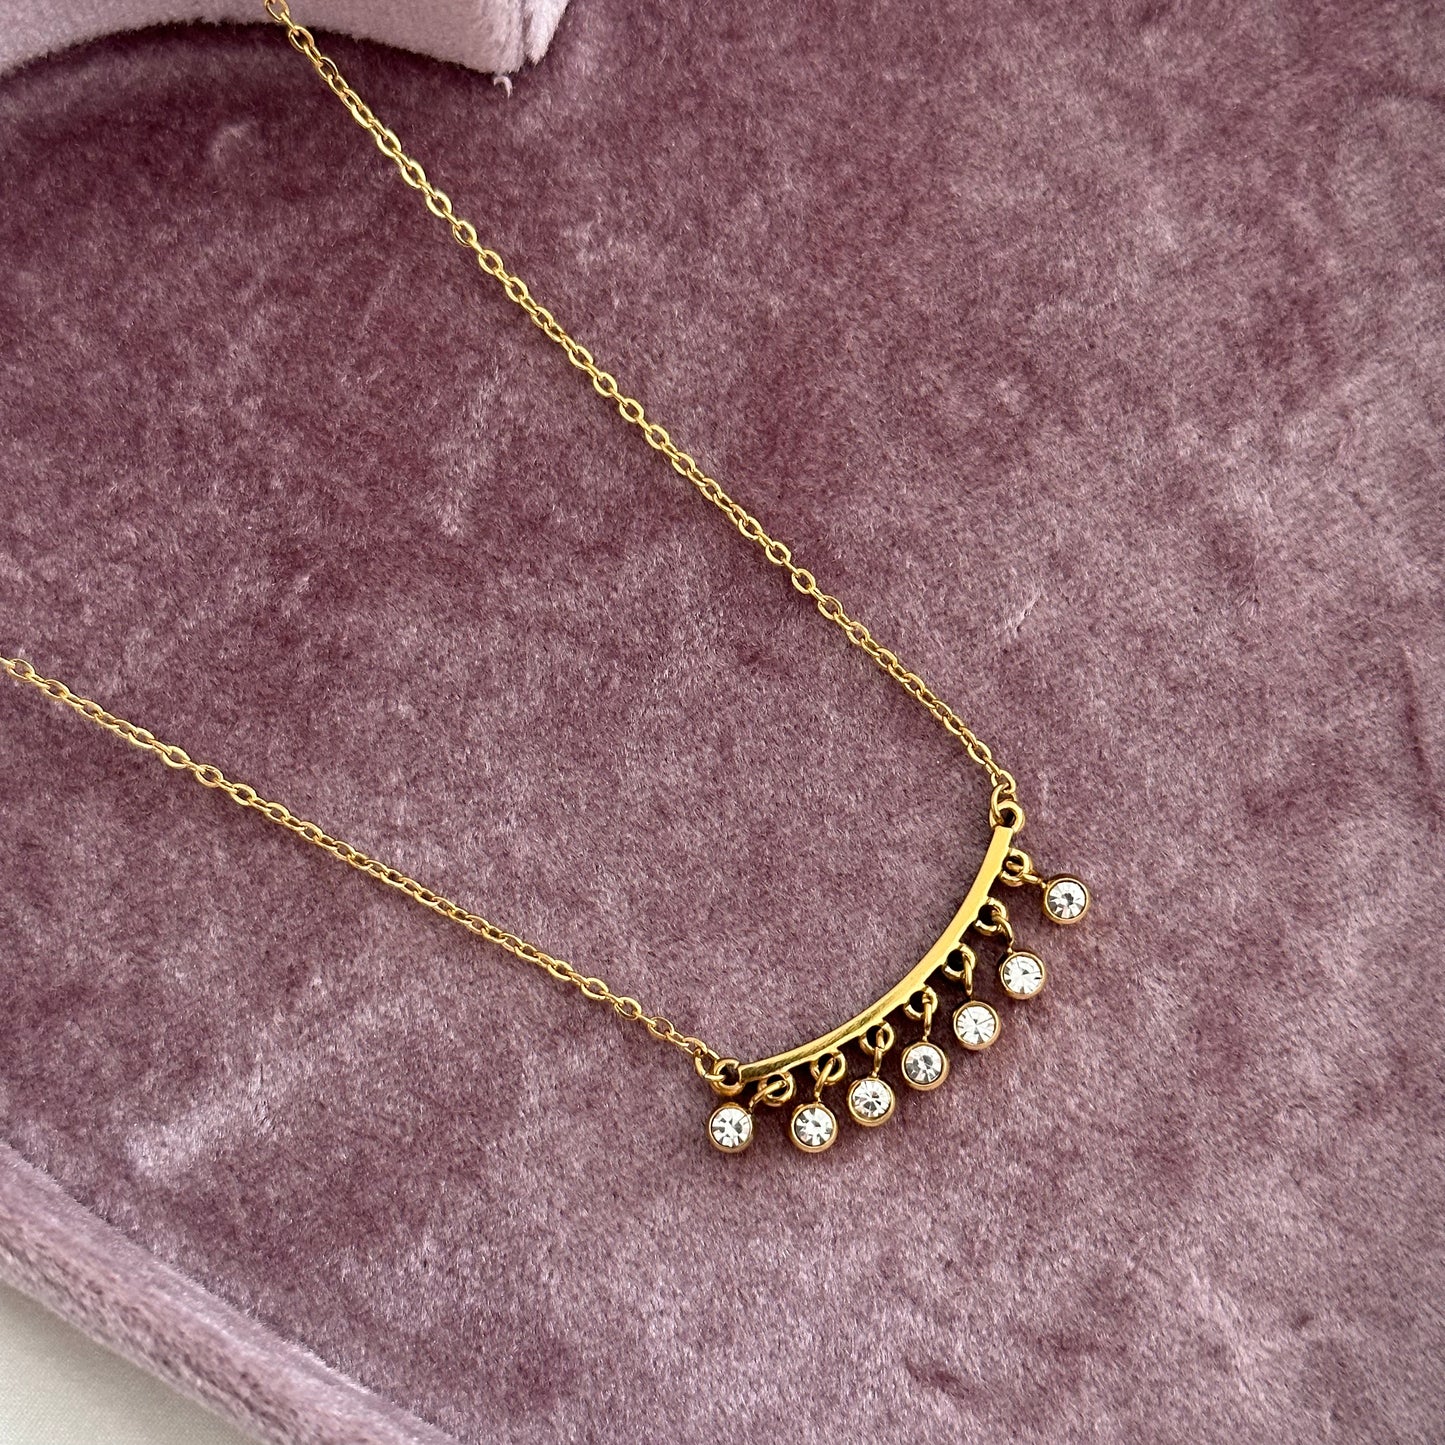 Florentine necklace